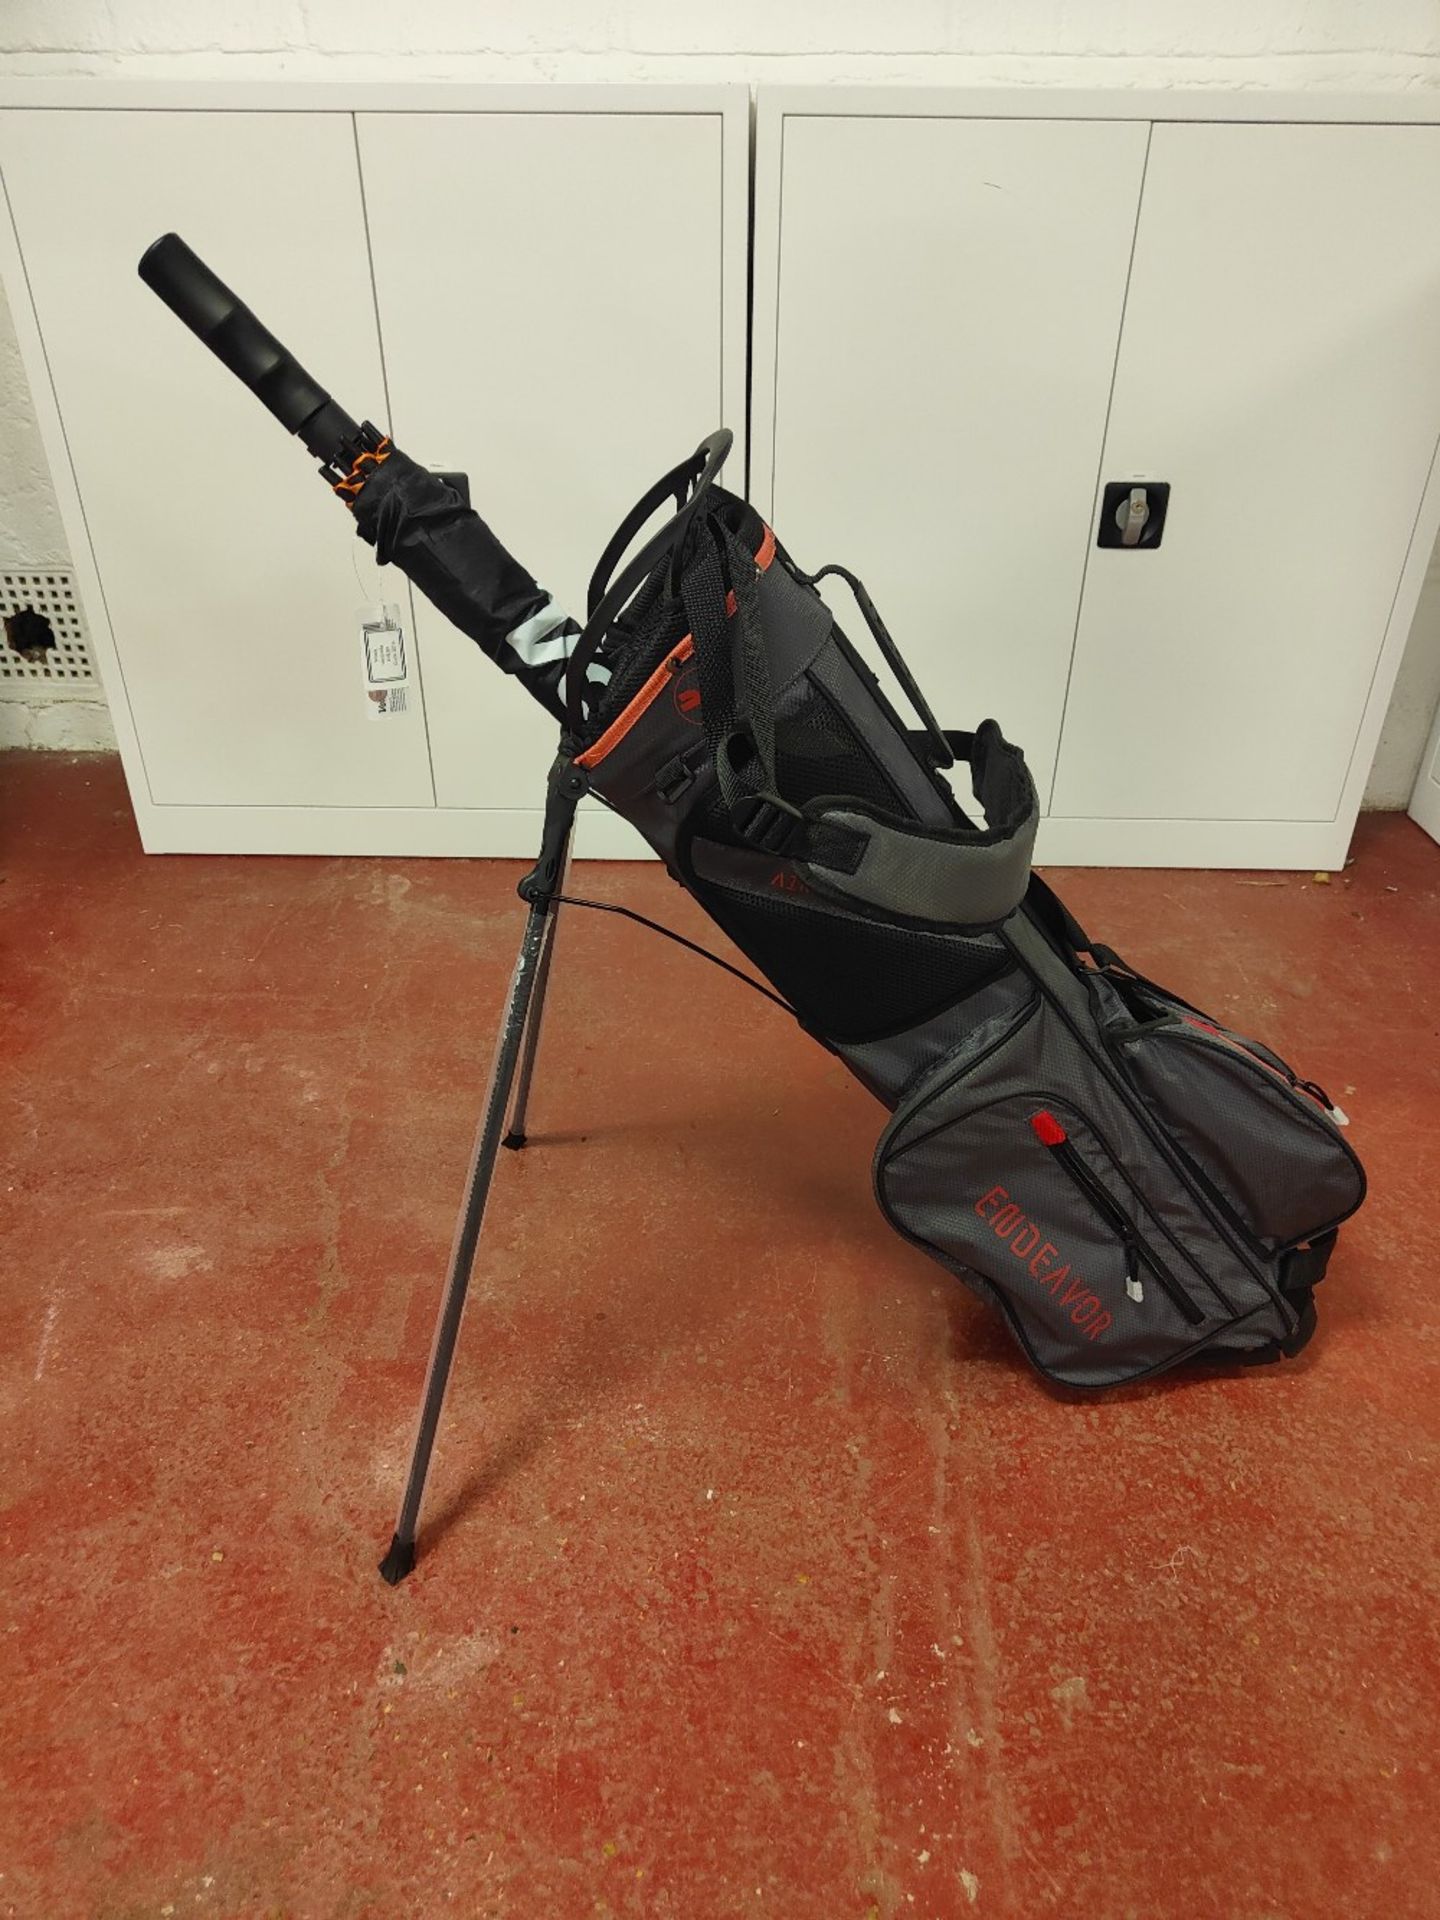 Fastfold Endeavor golf carry bag with Volvik umbrella - Image 2 of 3